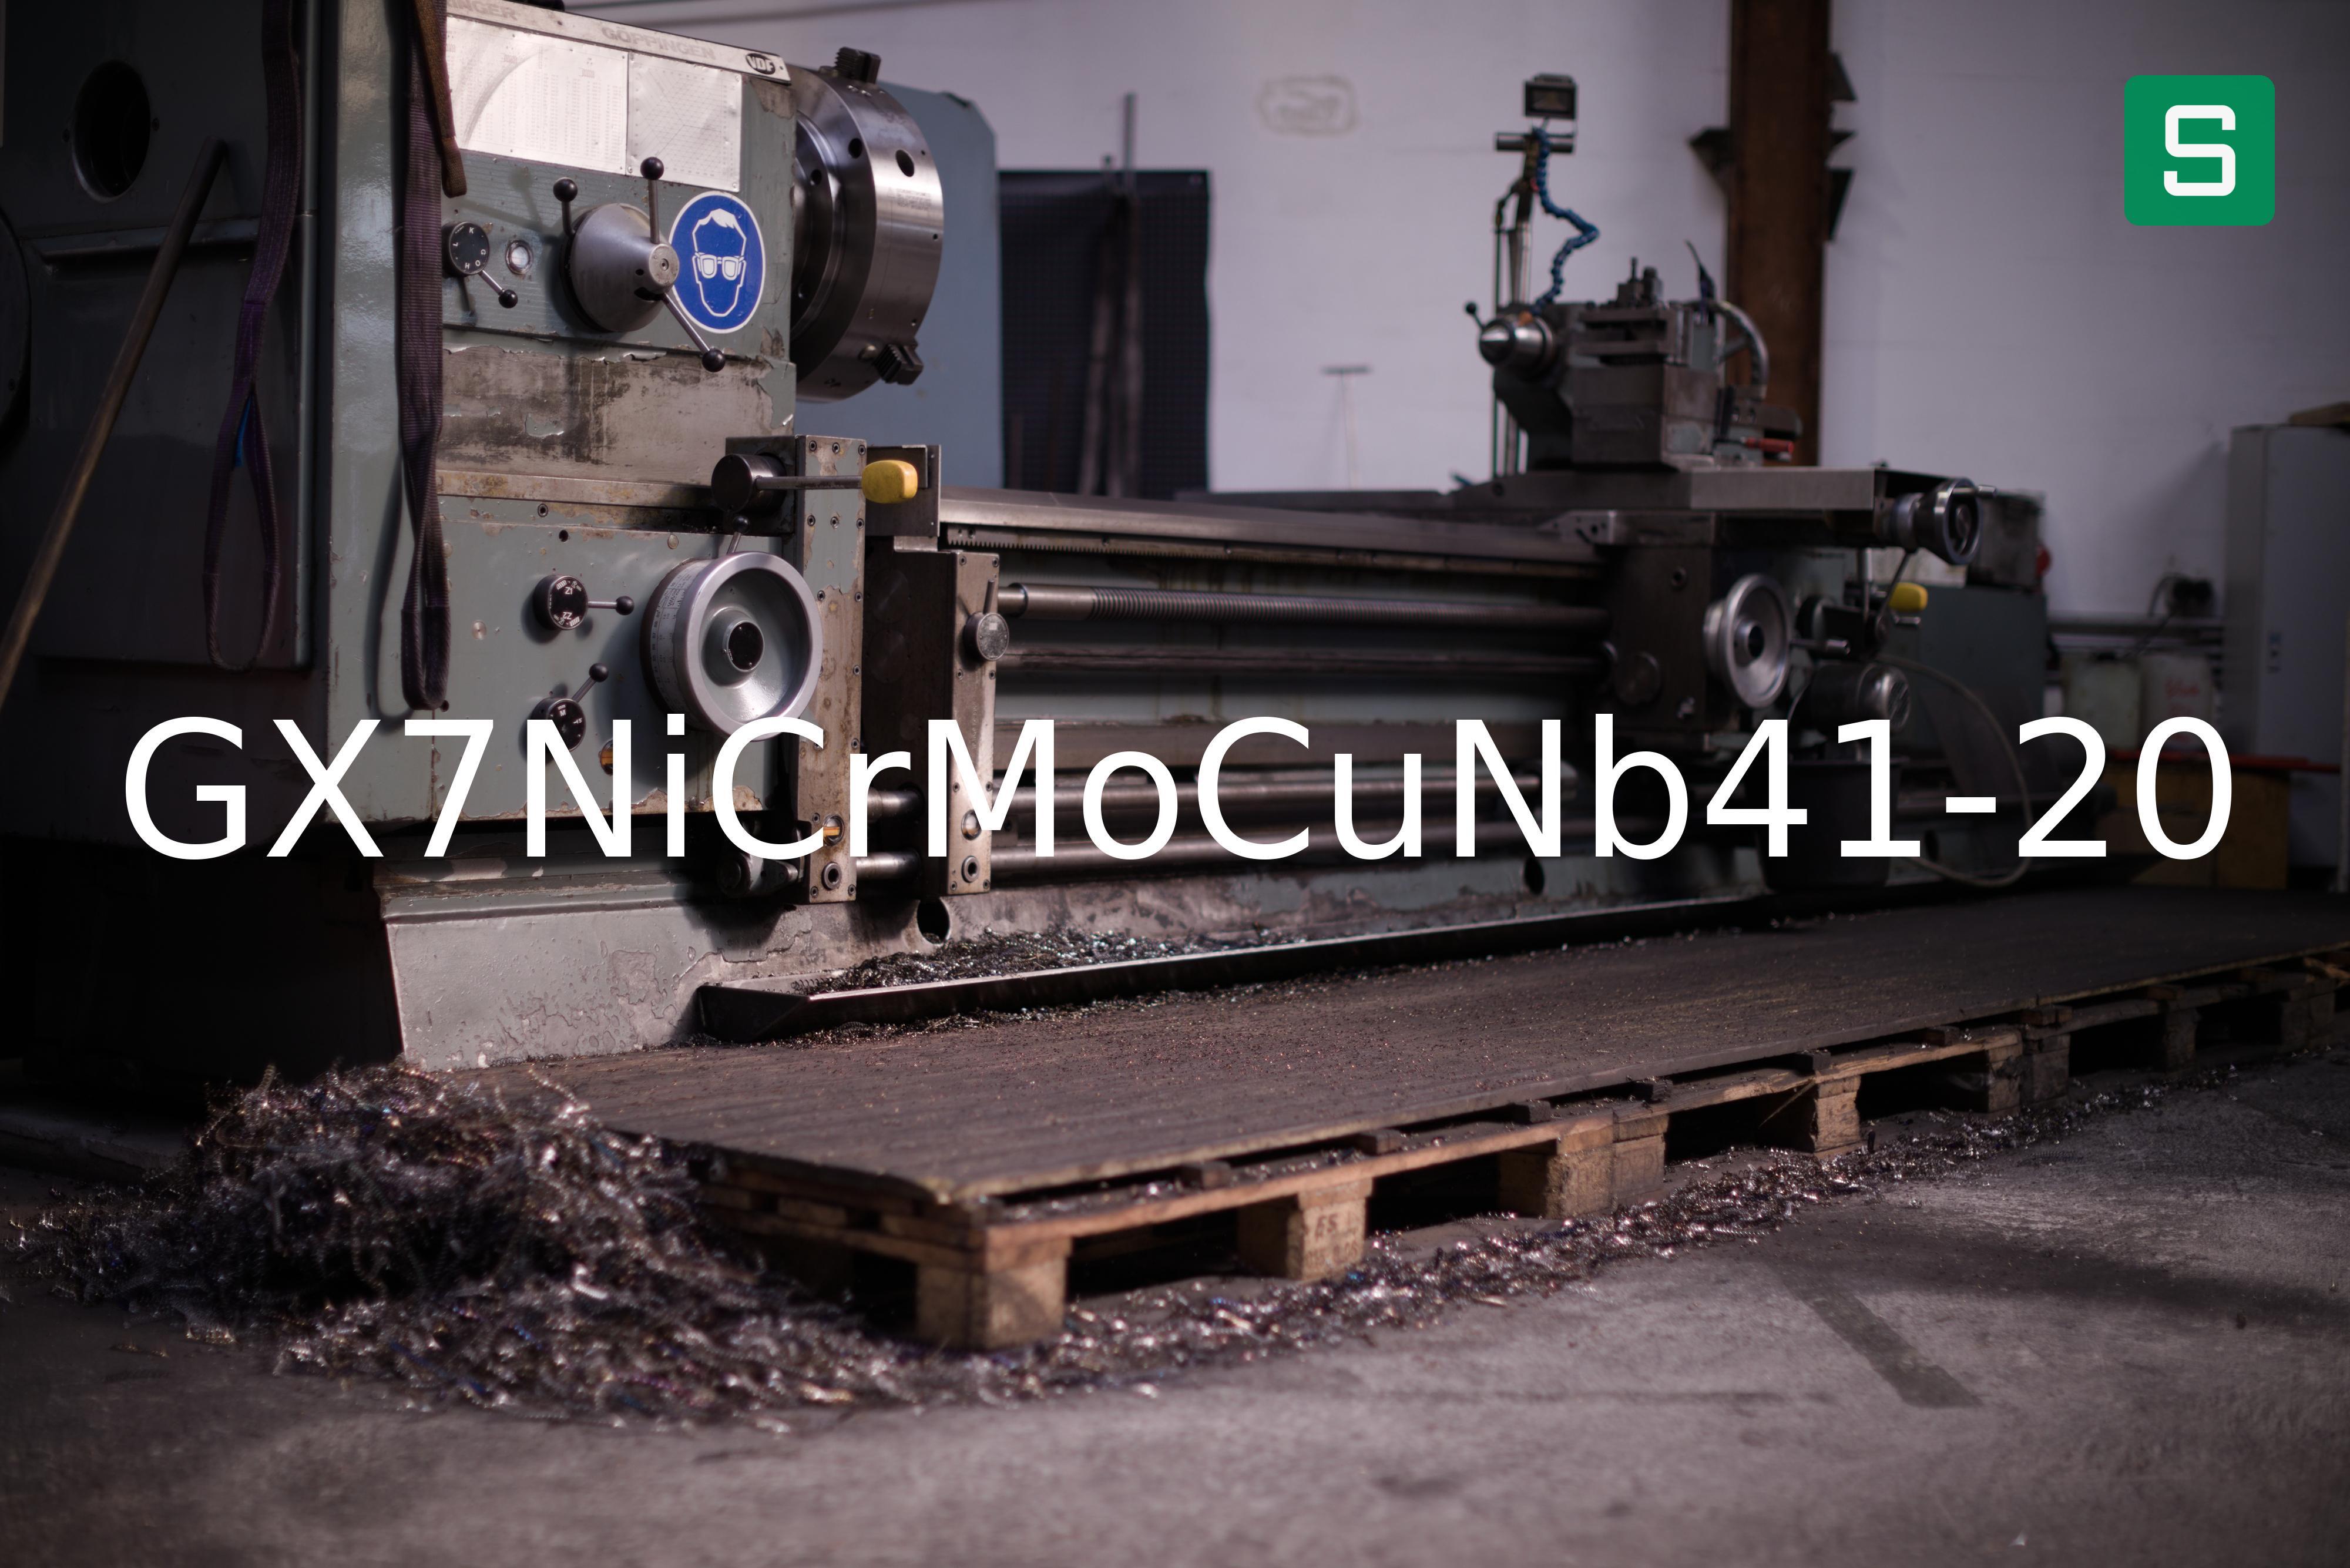 Steel Material: GX7NiCrMoCuNb41-20